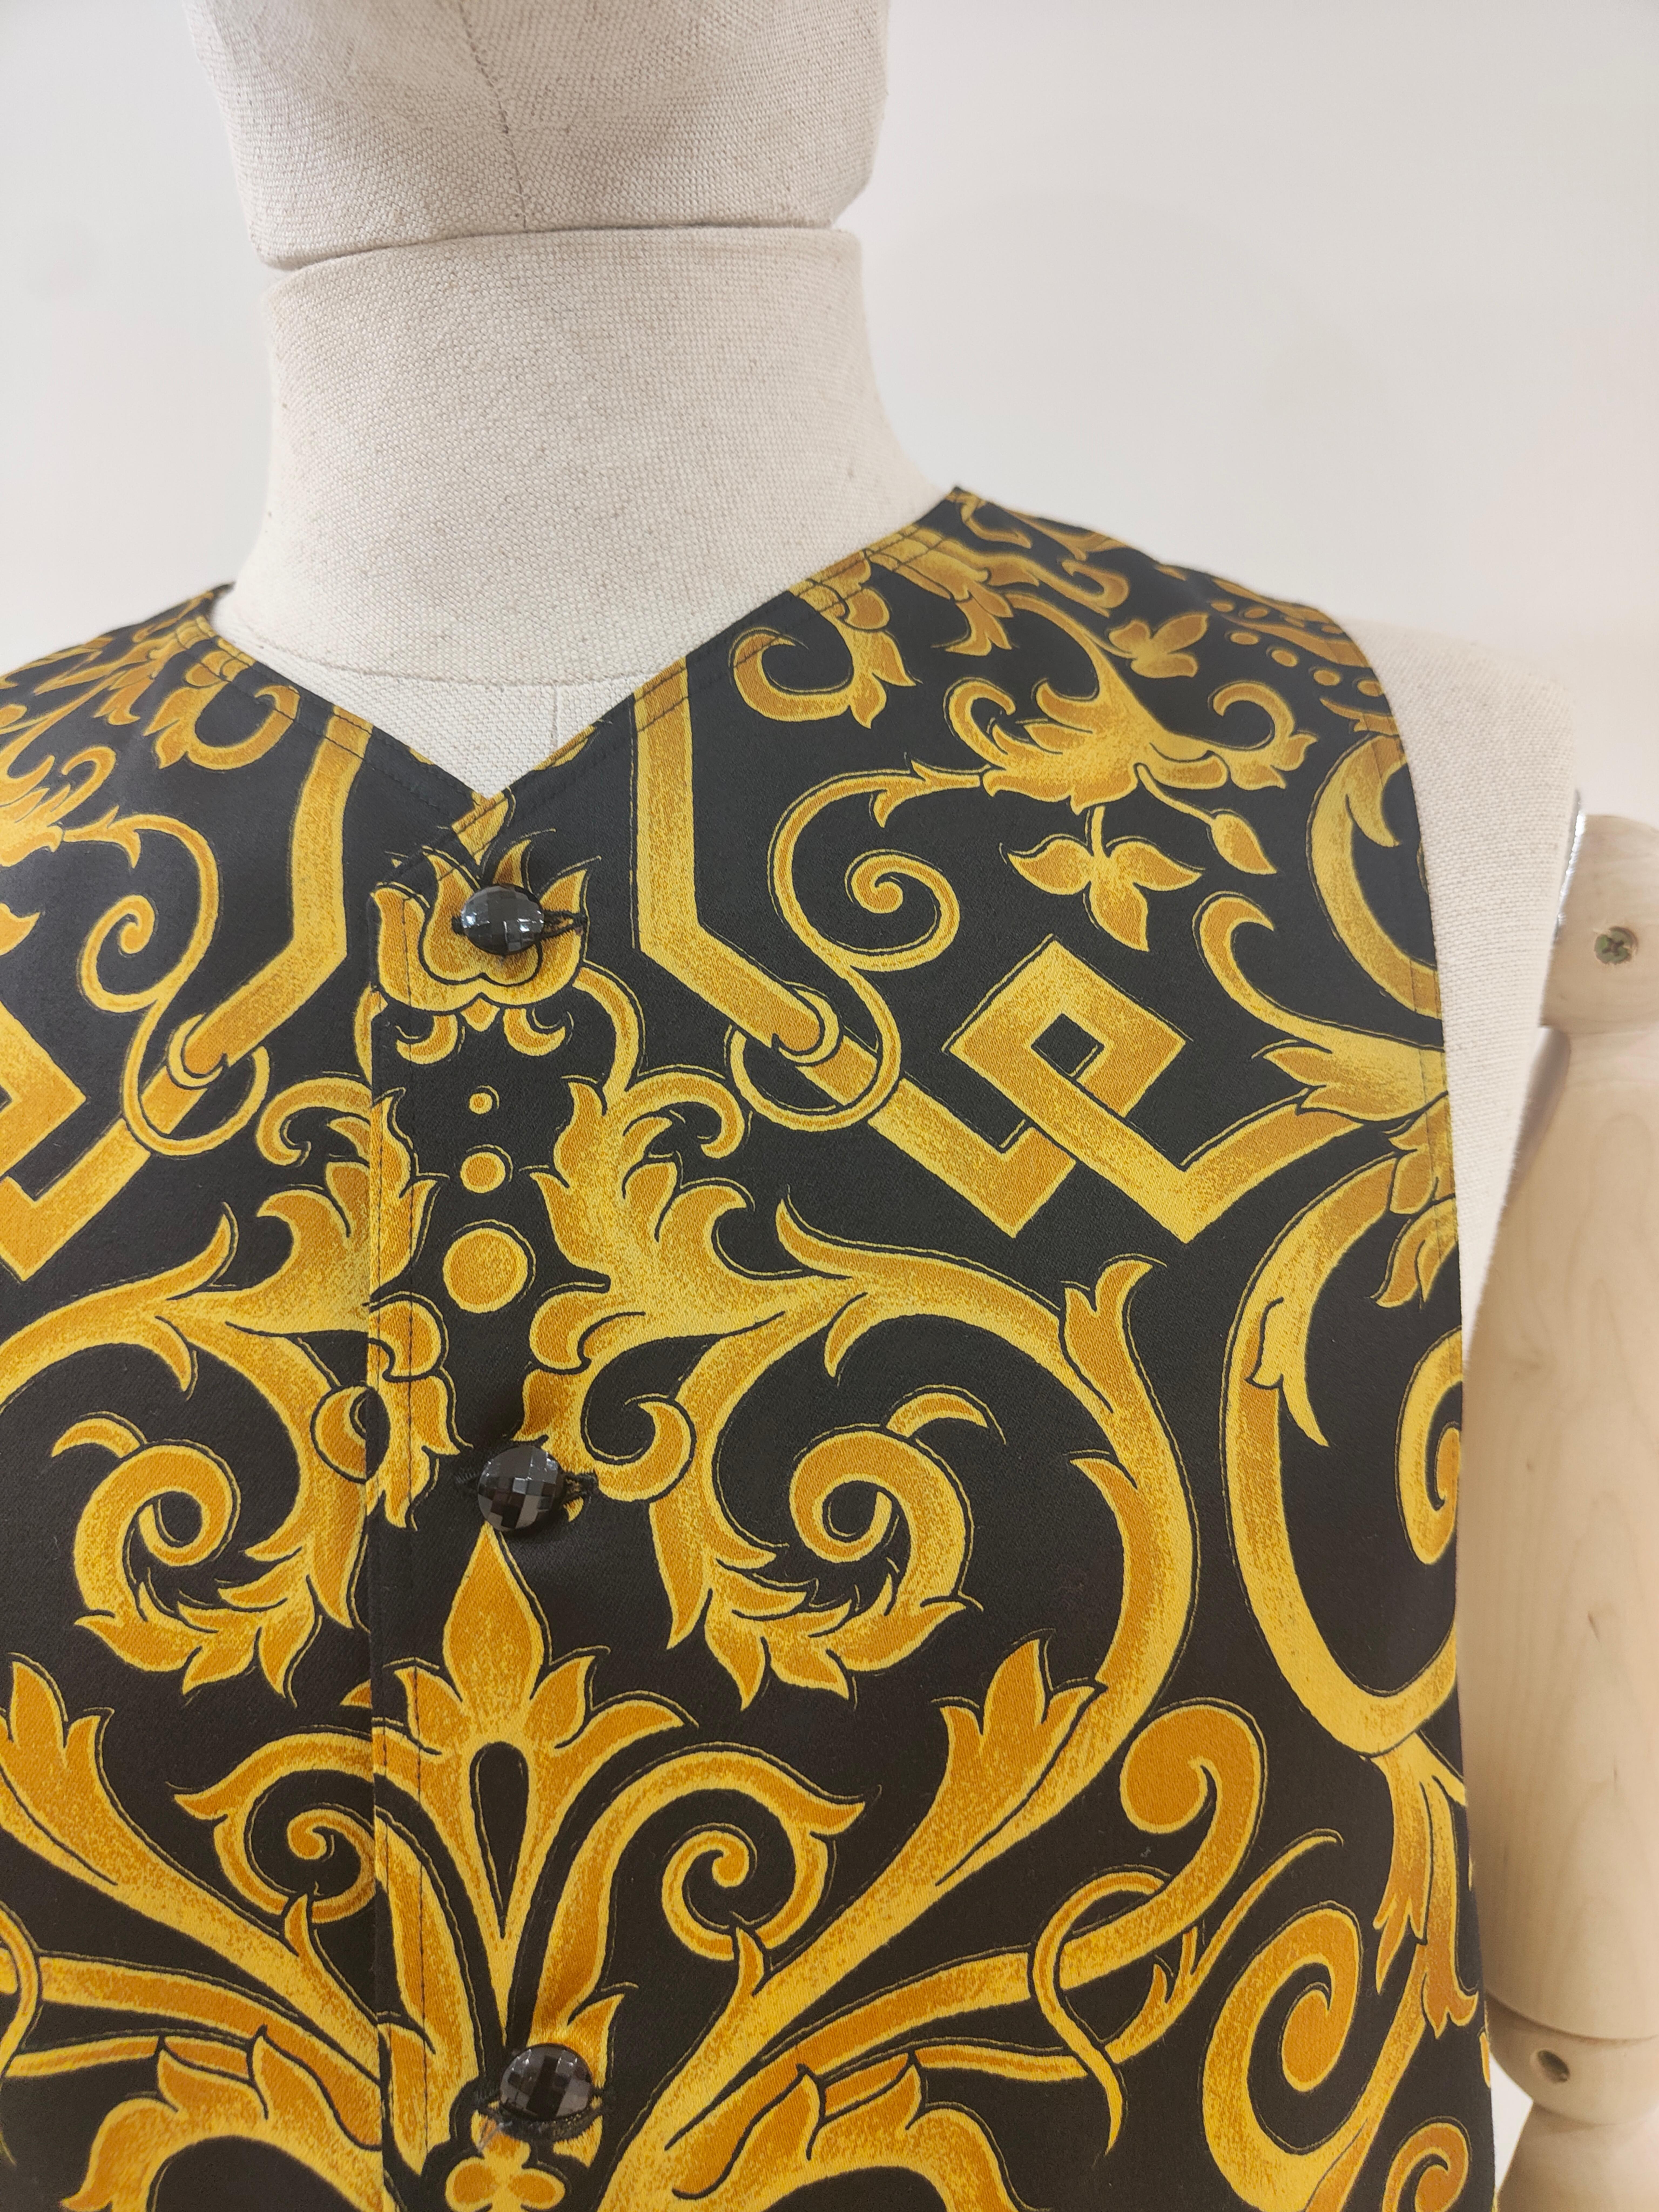 Gianni Versace Black Gold vest In Excellent Condition For Sale In Capri, IT